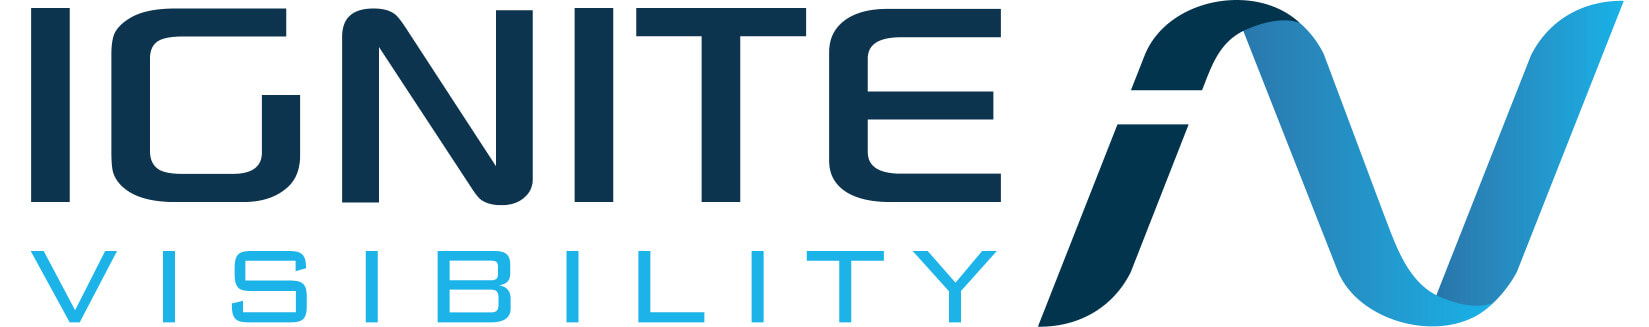 Best Enterprise SEO Company Logo: Ignite Visibility